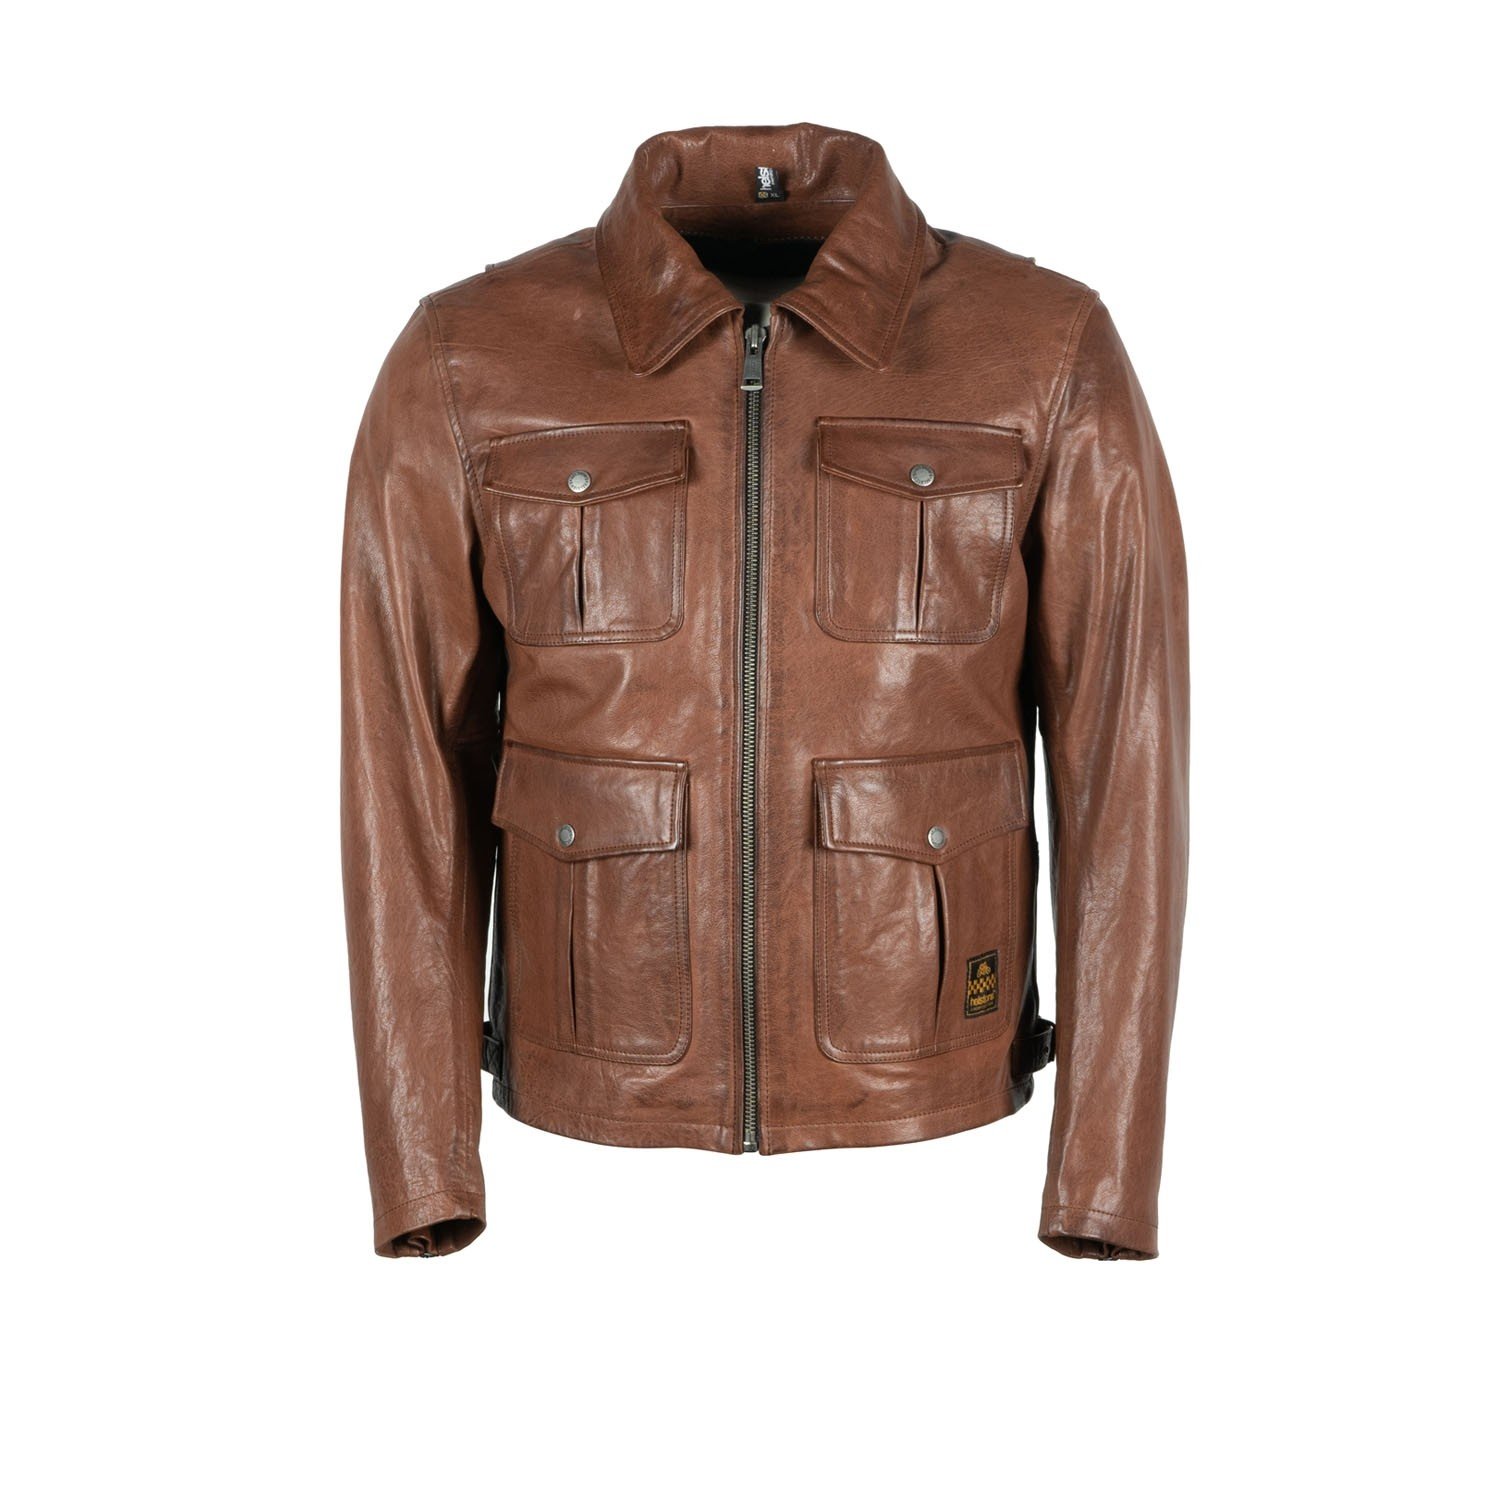 Image of Helstons Joey Leather Rag Jacket Brown Size M ID 3662136083332